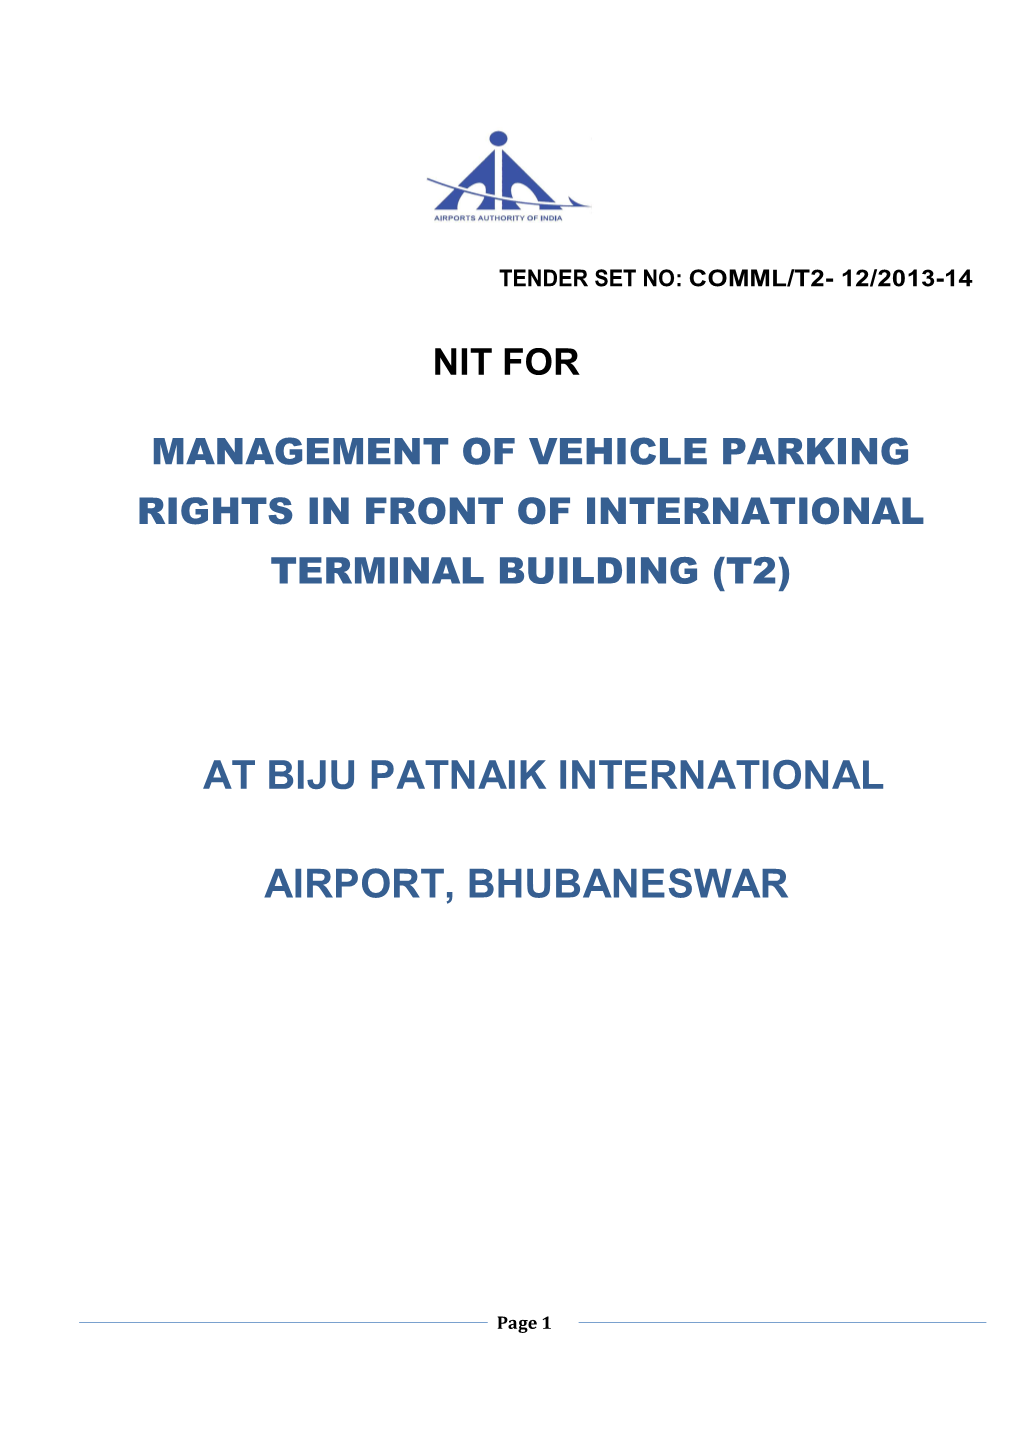 At Biju Patnaik International Airport, Bhubaneswar